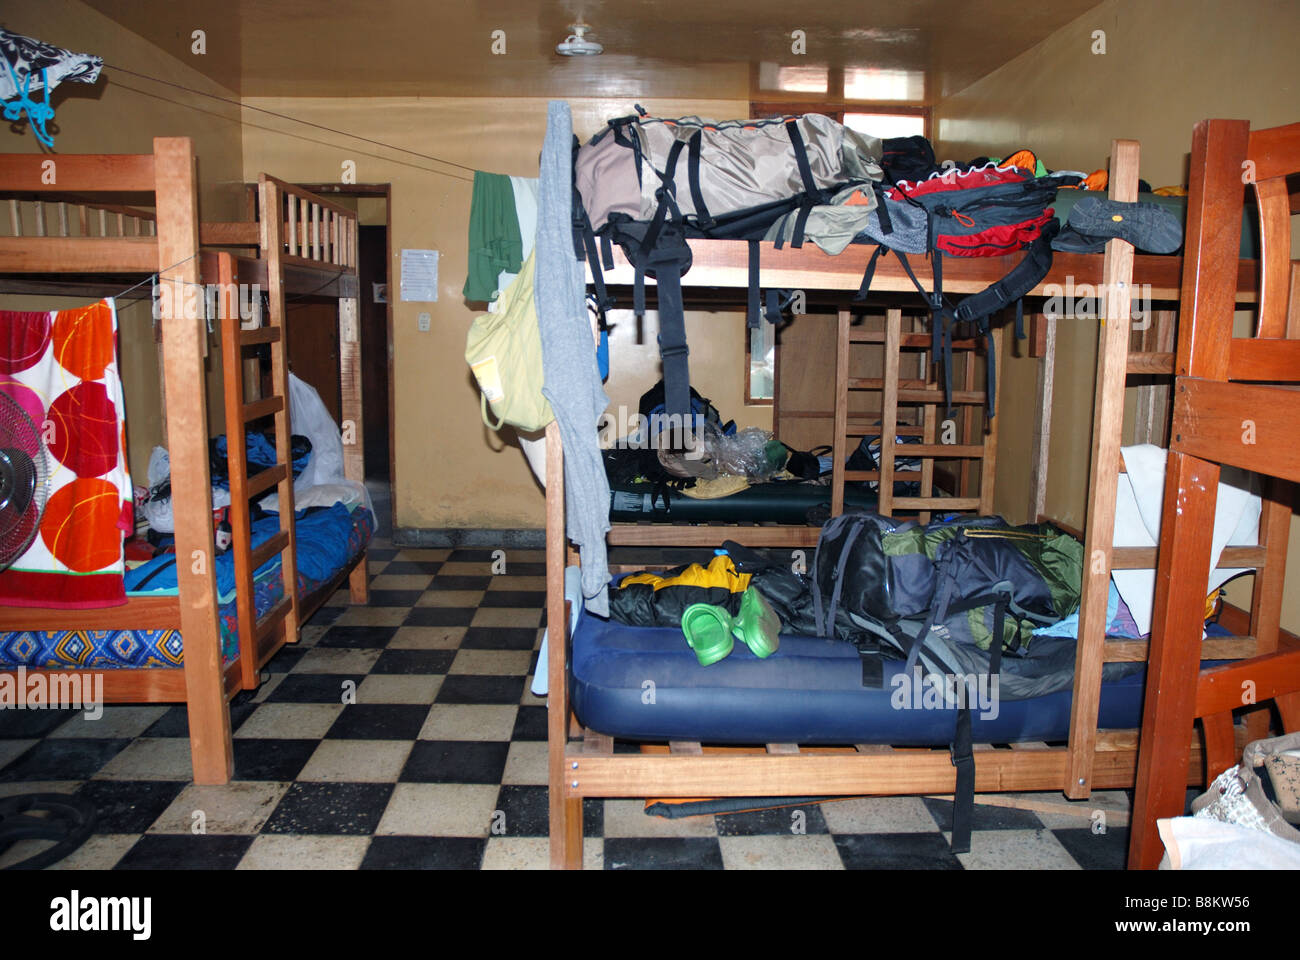 Dormitory room for international travelers. Stock Photo